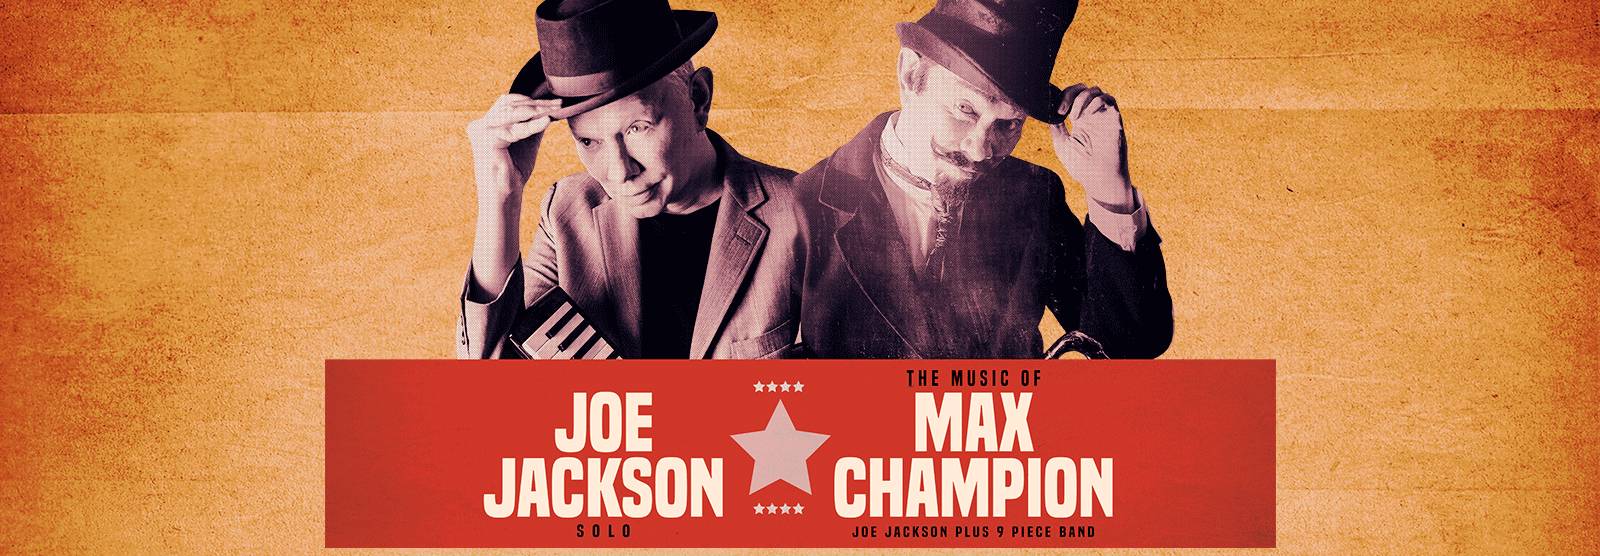 Mr. Joe Jackson Presents: Joe Jackson Solo and The Music of Max Champion